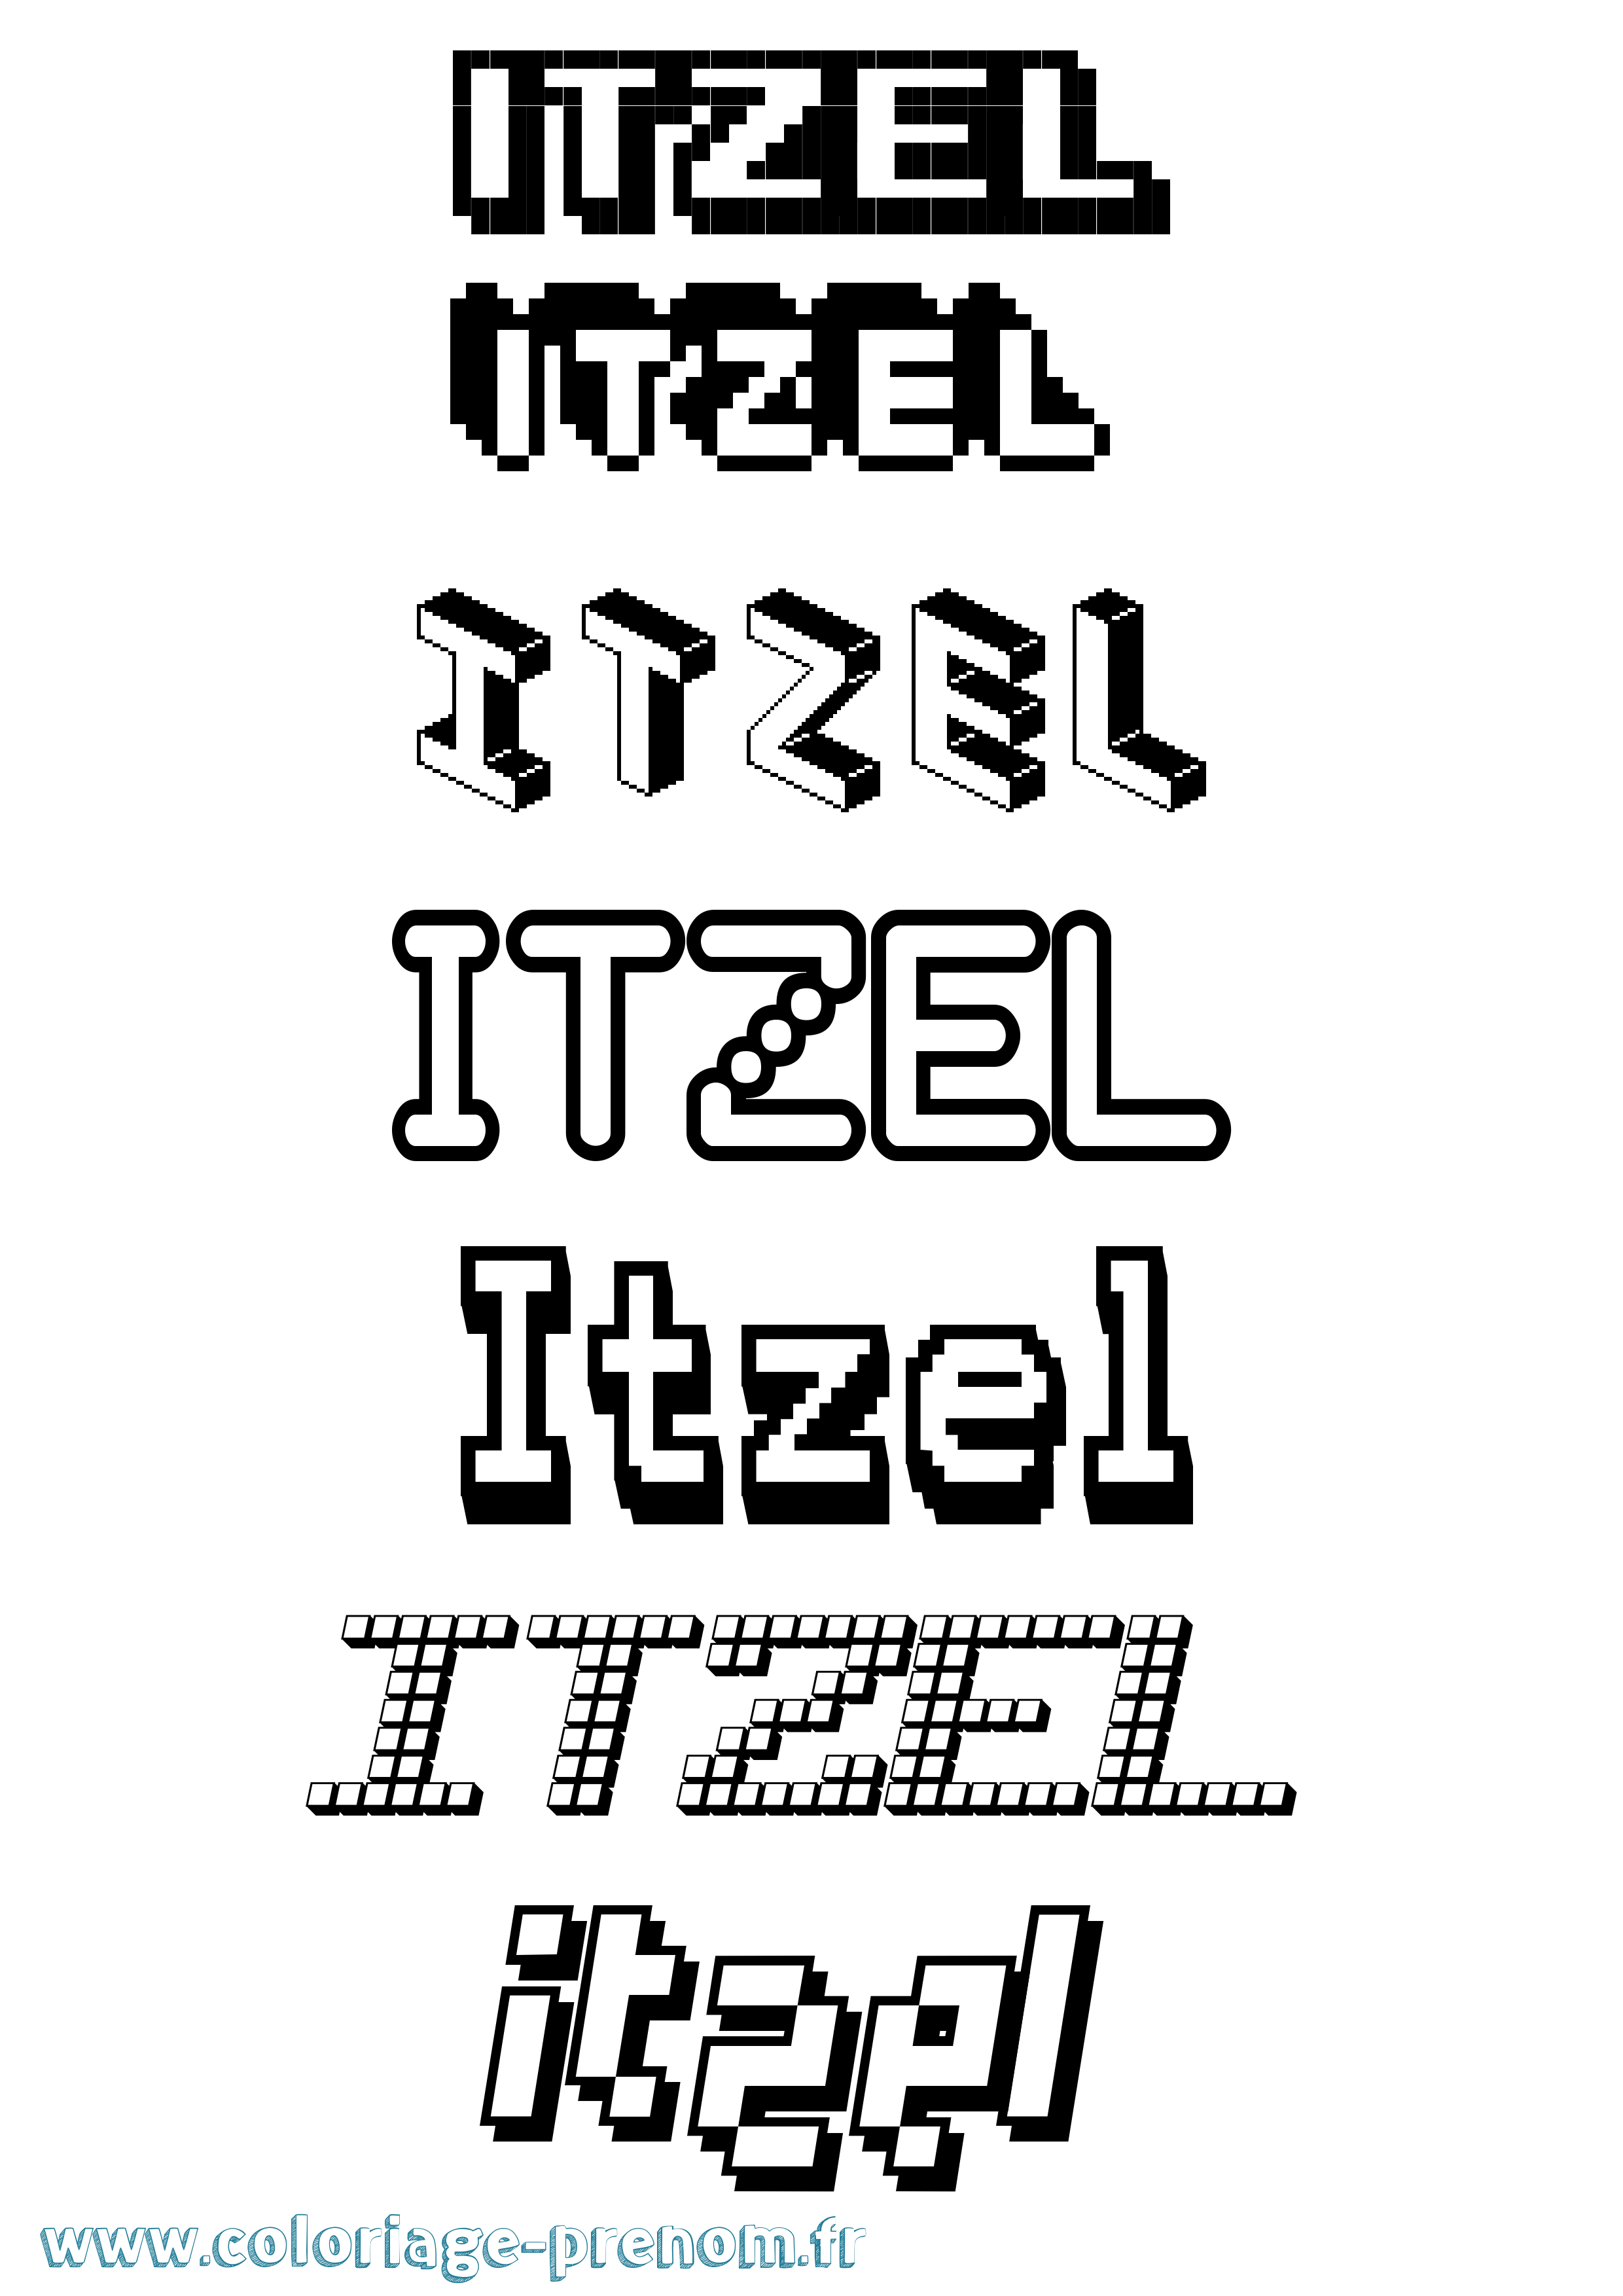 Coloriage prénom Itzel Pixel